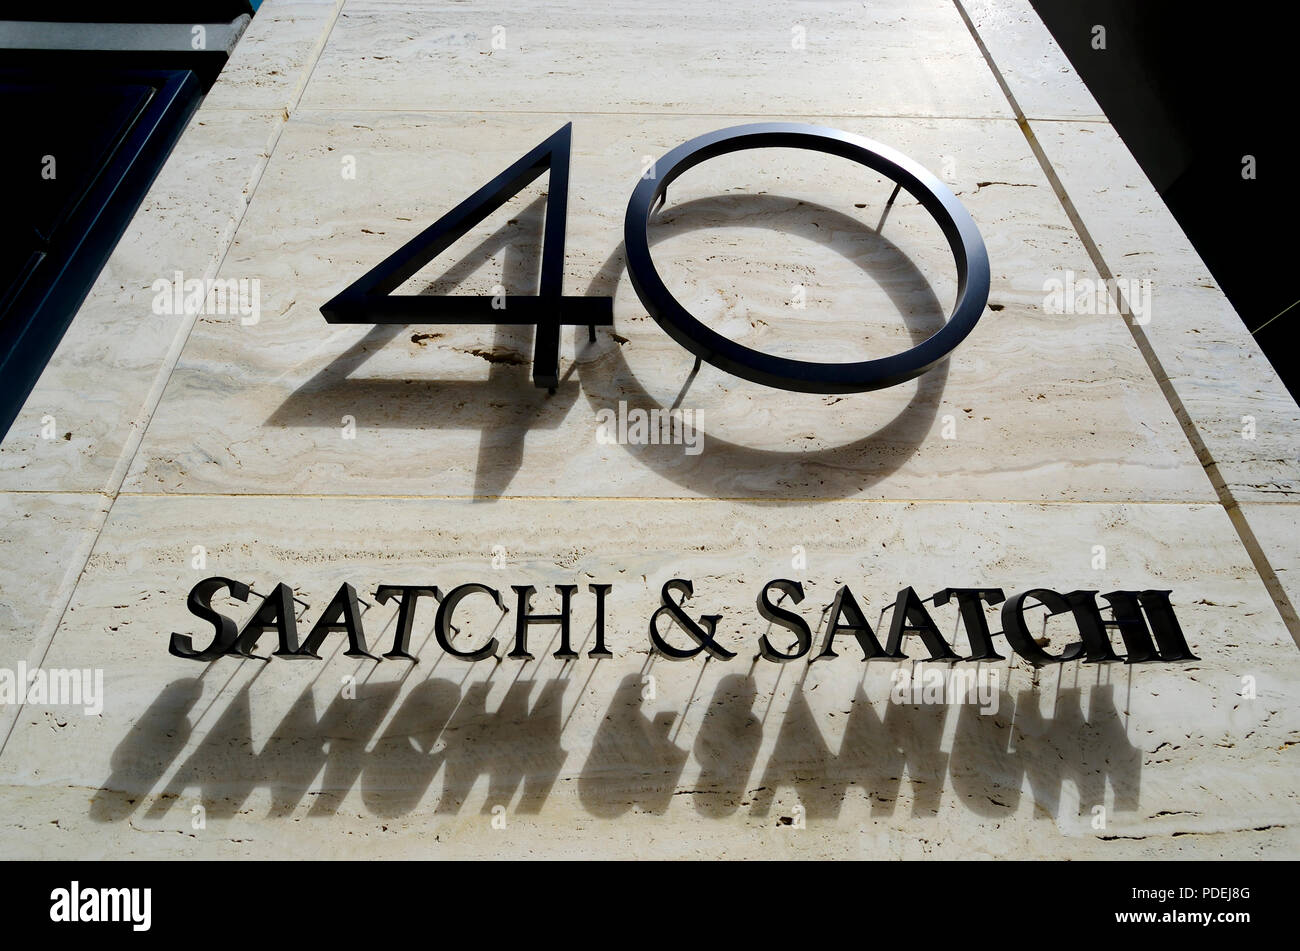 Saatchi & Saatchi uffici presso 40 Chancery Lane, Londra, Inghilterra, Regno Unito. Foto Stock